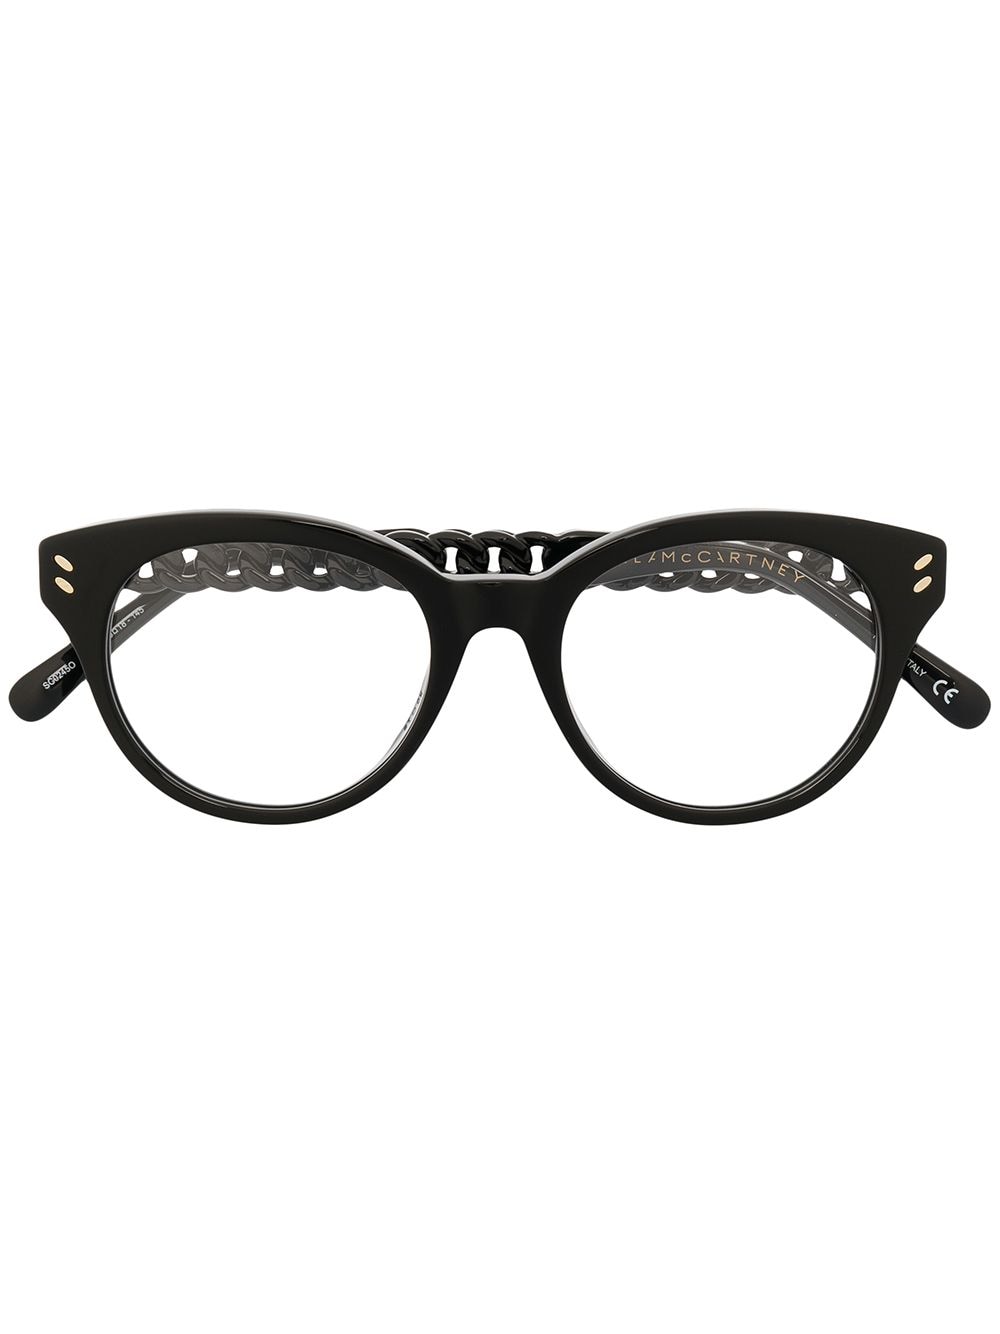 stella mccartney eyewear lunettes de vue à monture ronde - noir